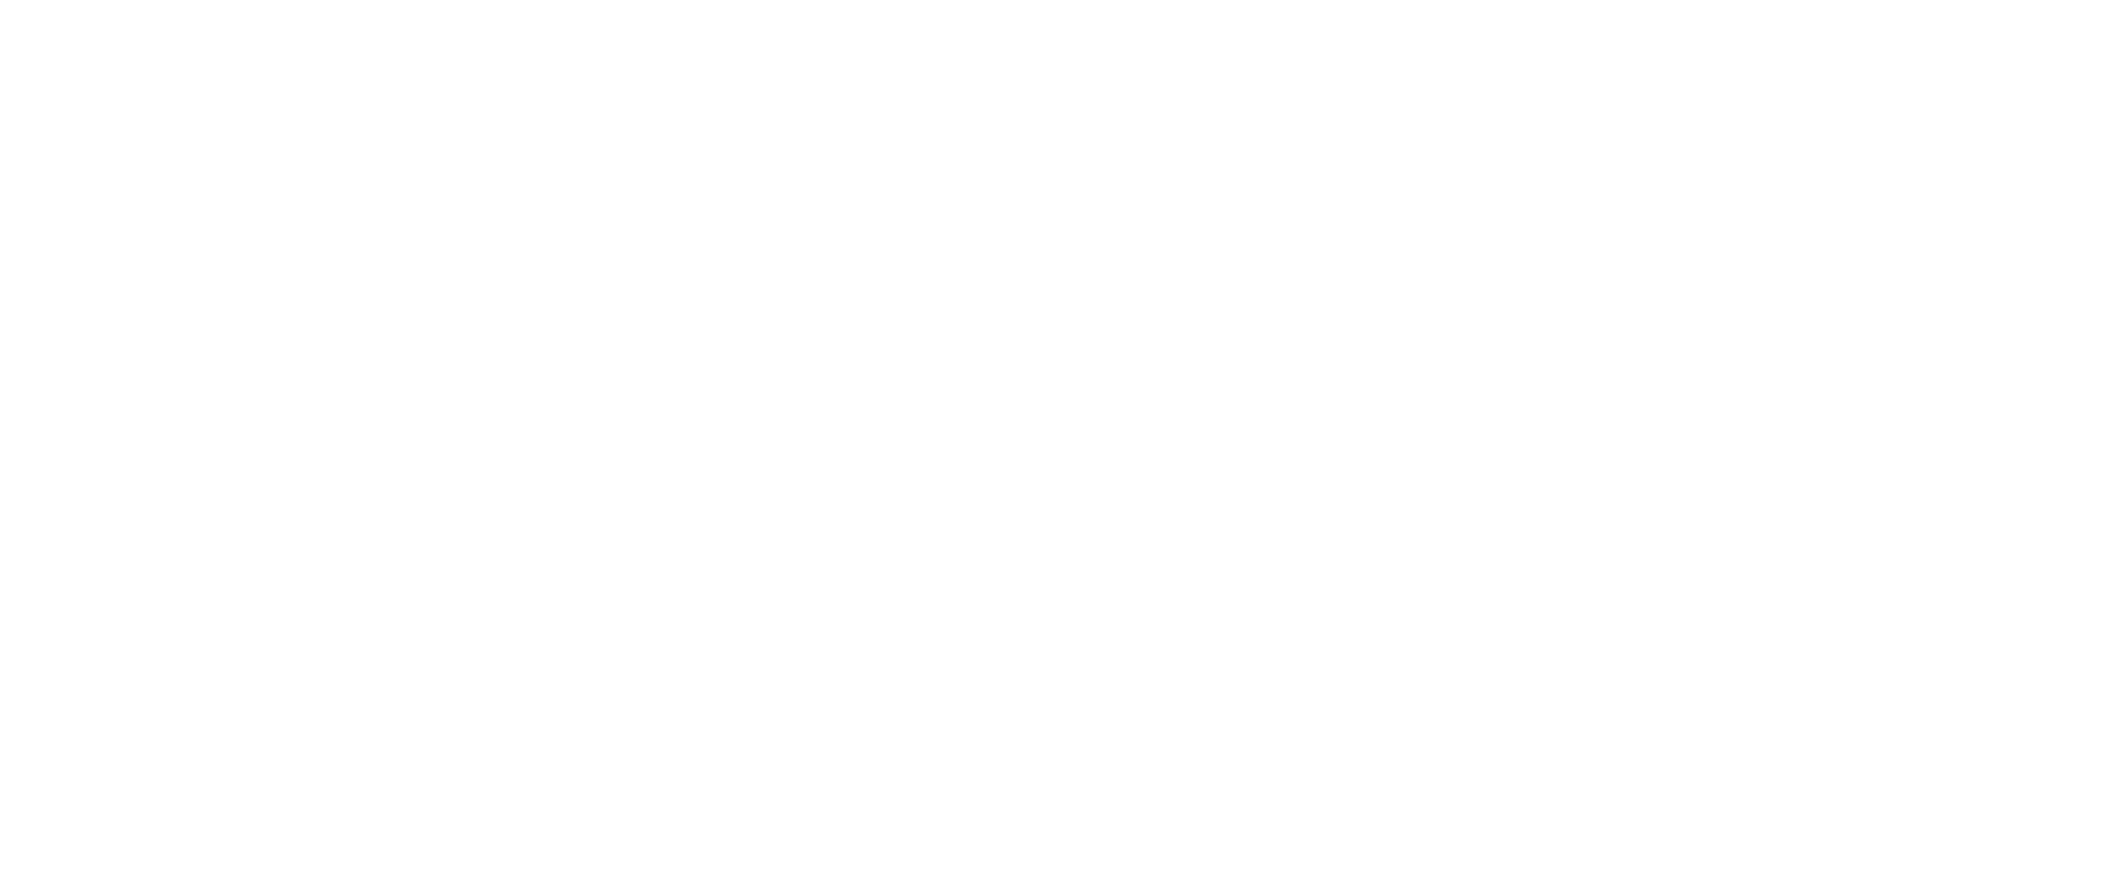 A fish saying hello.